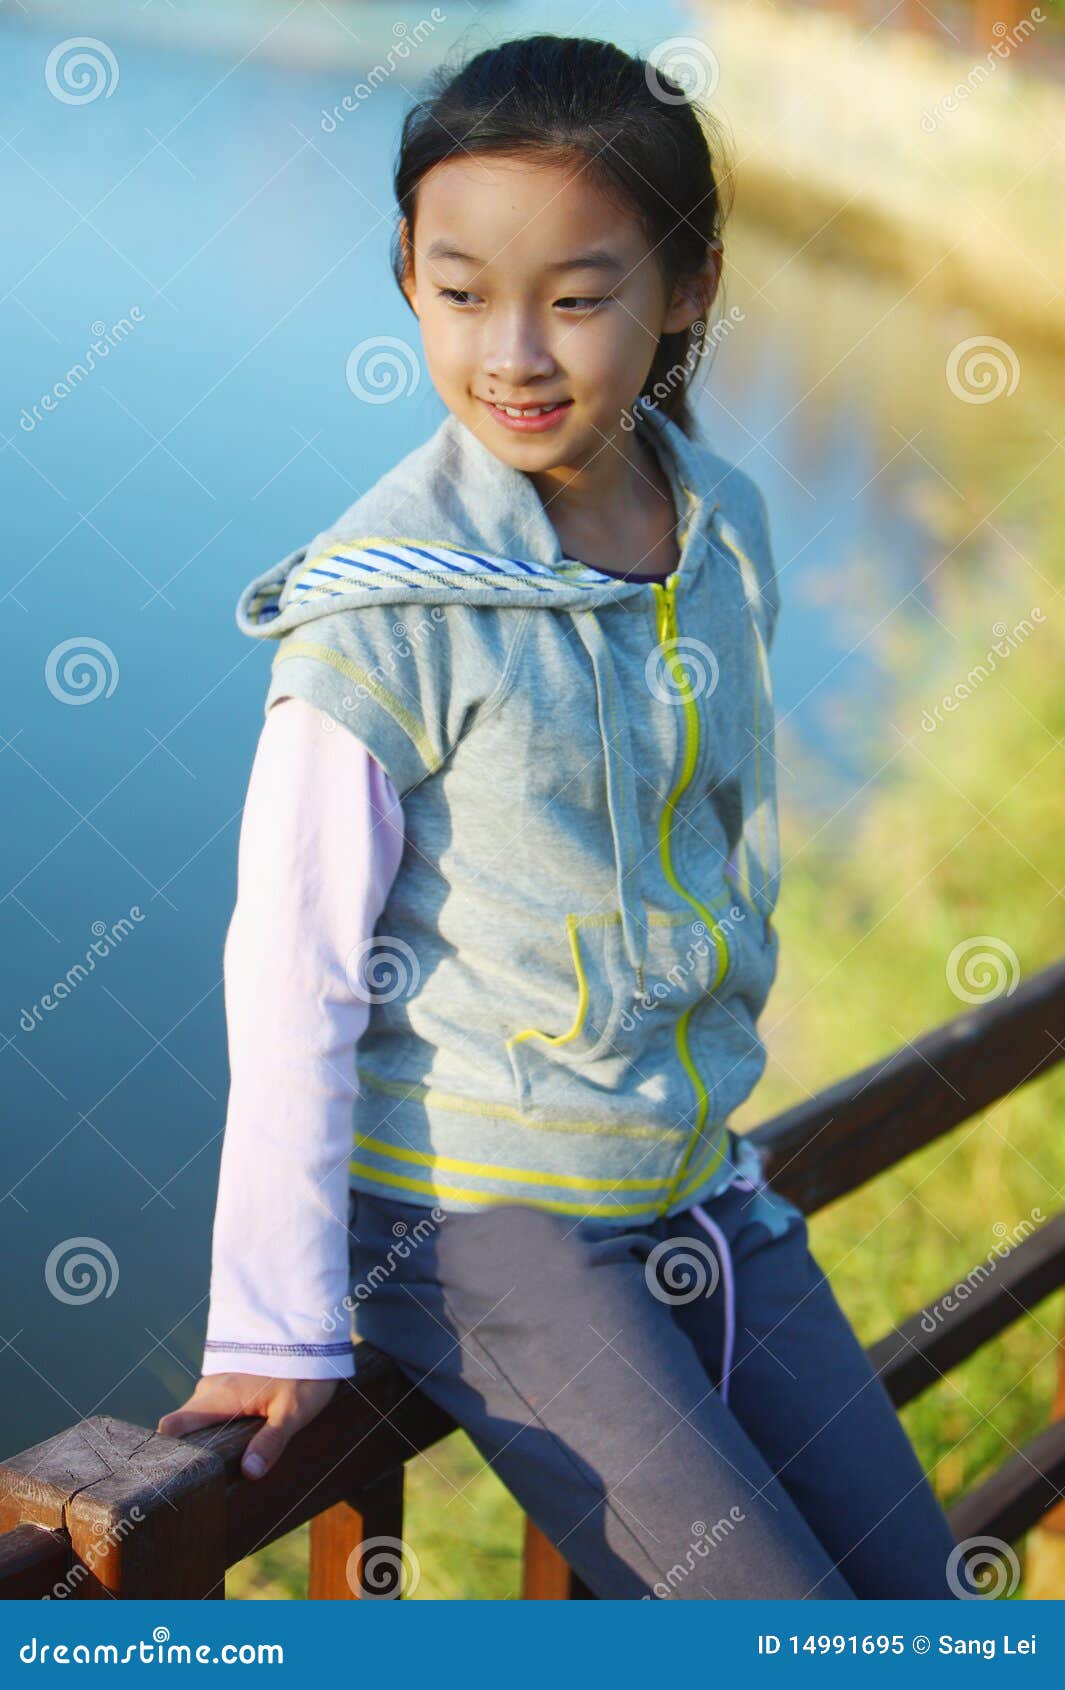 Chinese girl stock image. Image of leisure, summer, smiling - 14991695